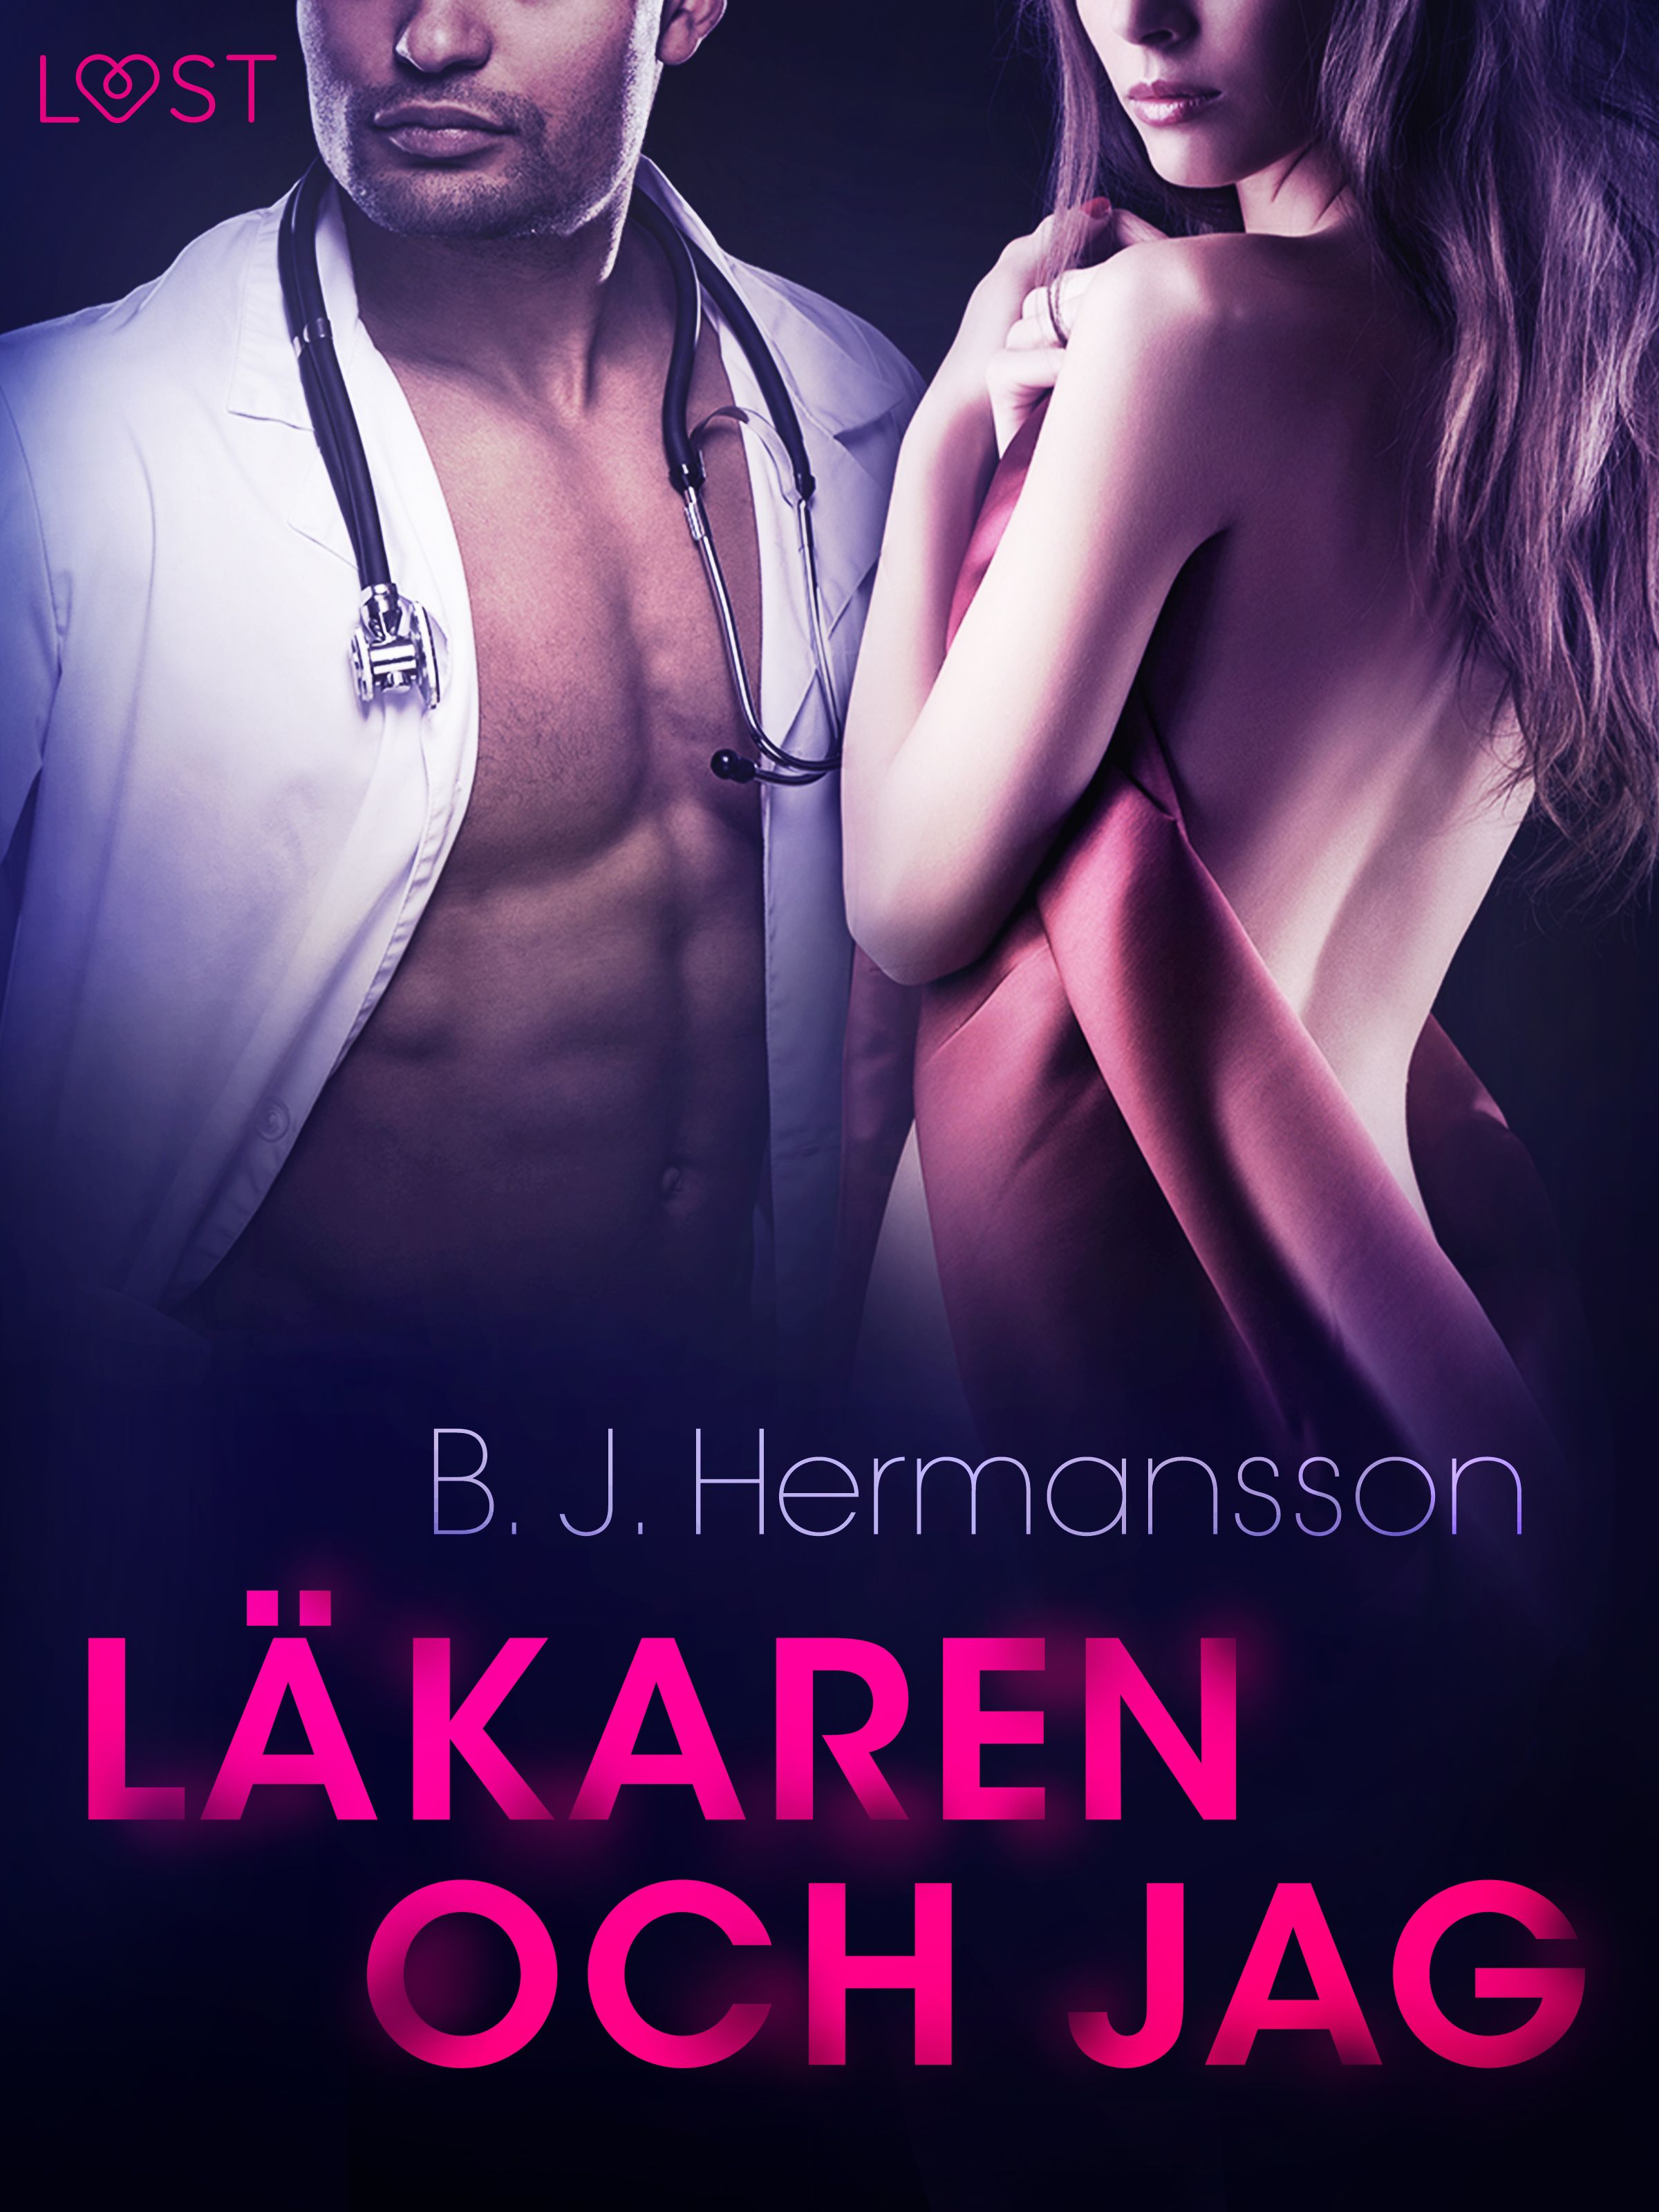 Läkaren och jag - erotisk novell, e-bog af B. J. Hermansson